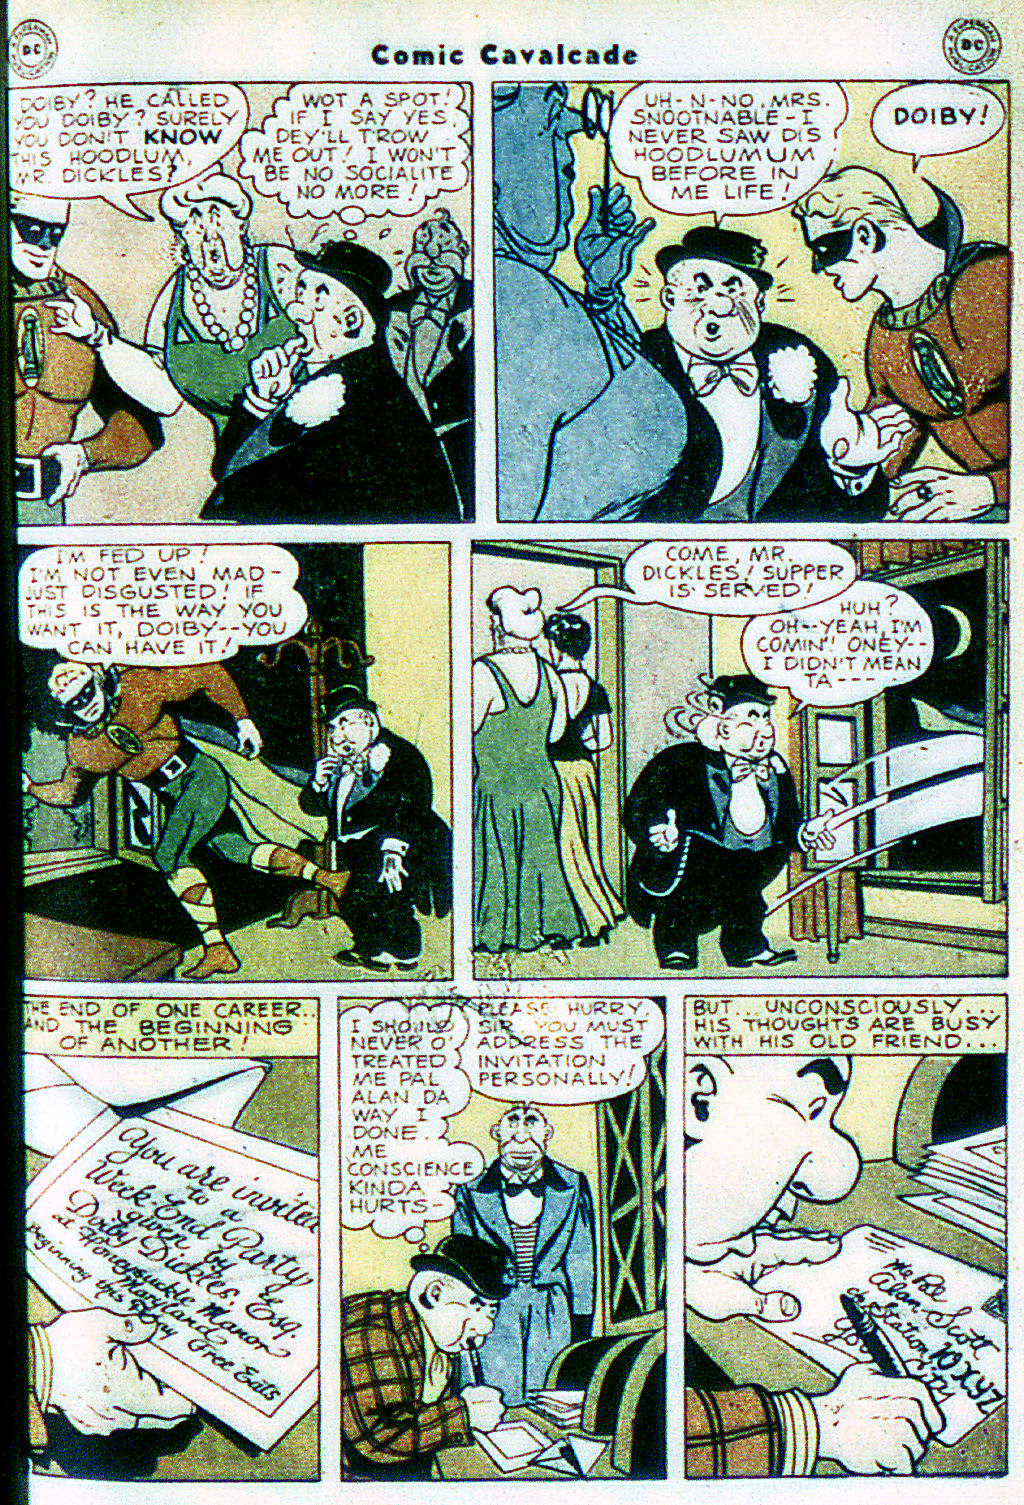 Comic Cavalcade issue 17 - Page 70